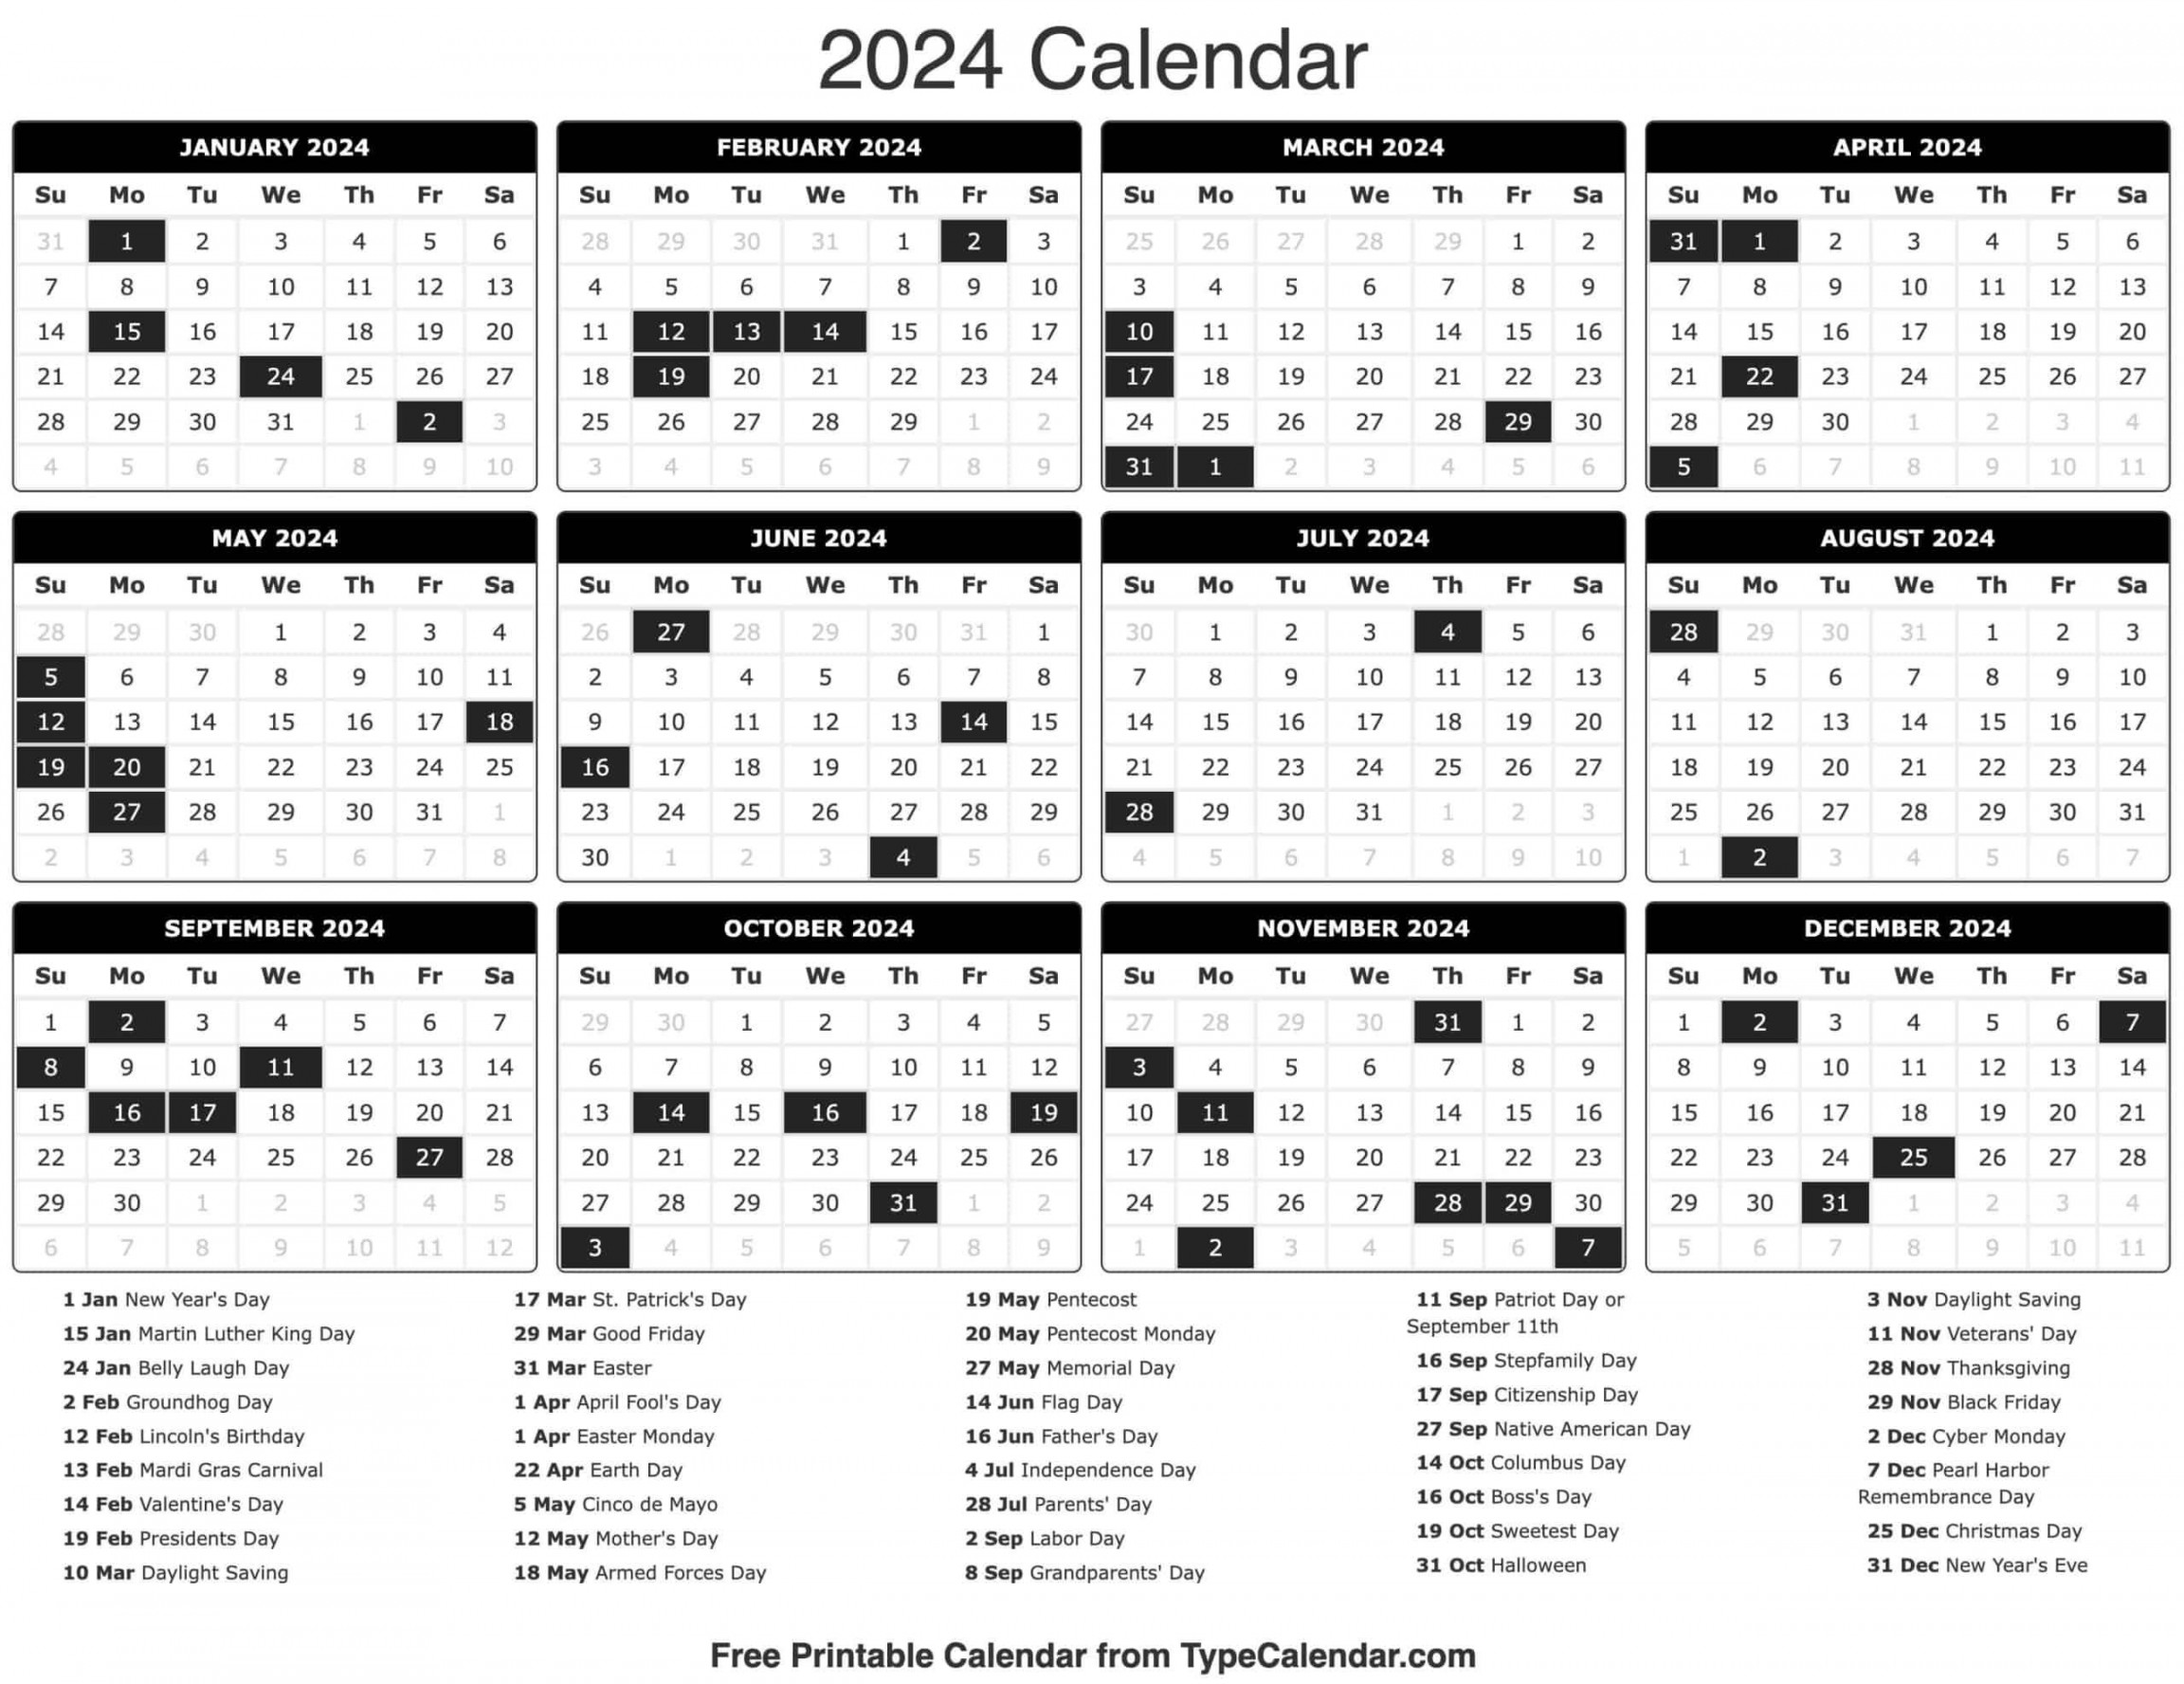 Monthly Calendars () - Free Printable Calendar